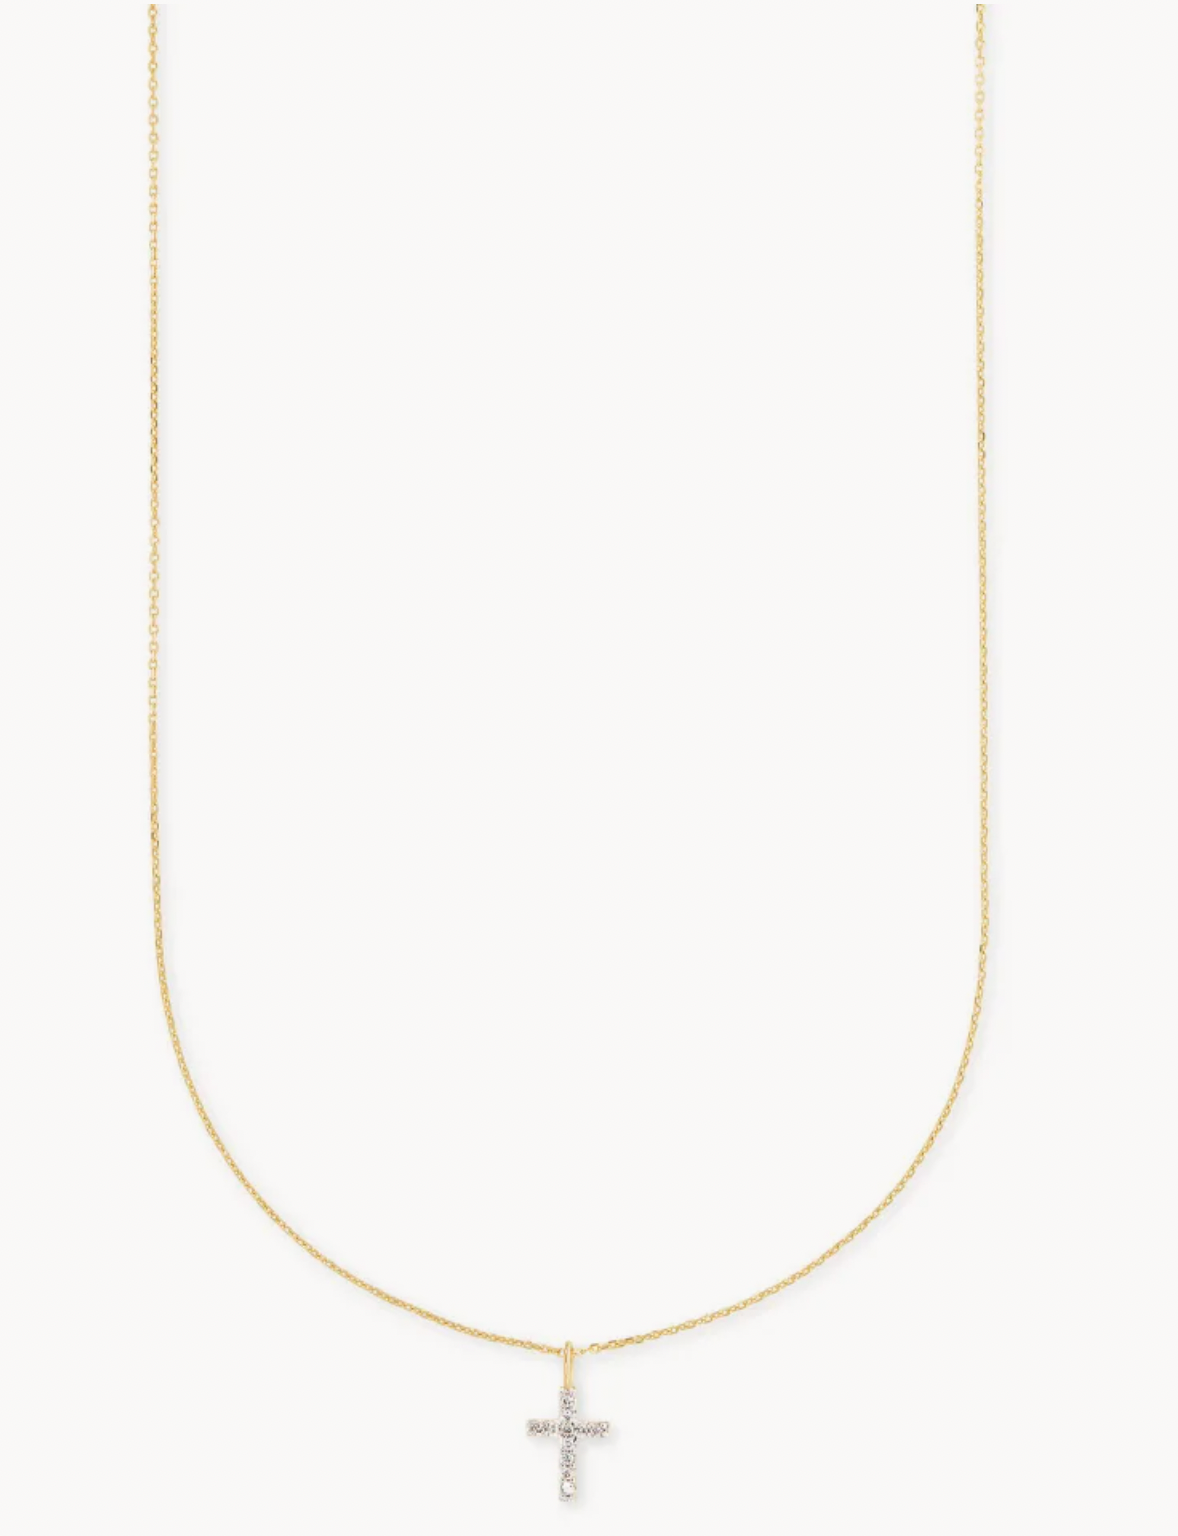 Kendra Scott 14k Yellow Gold Cross Pendant Necklace in White Diamonds